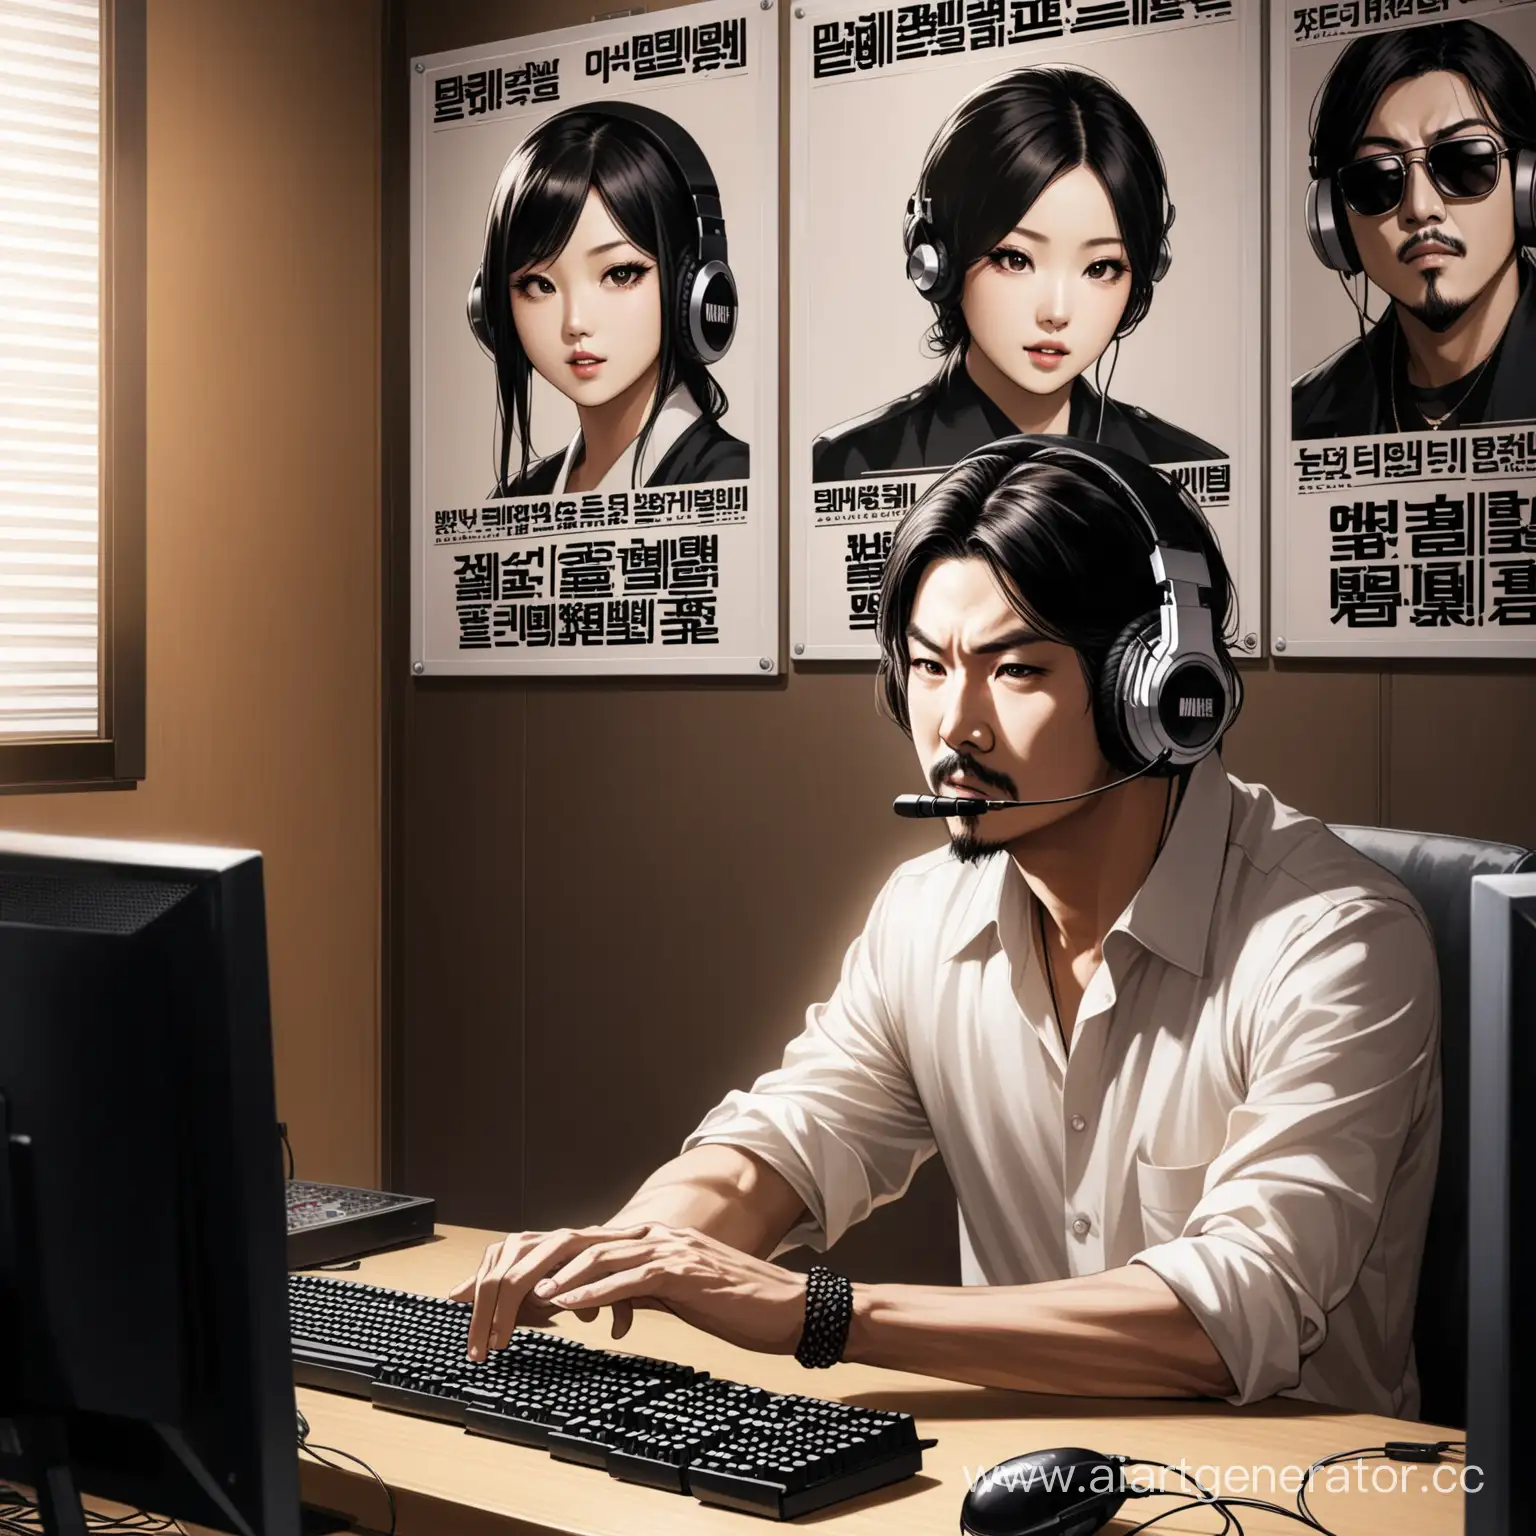 Japanese-Mafia-Gamer-Engrossed-in-Counter-Strike-with-Korean-Singer-Posters